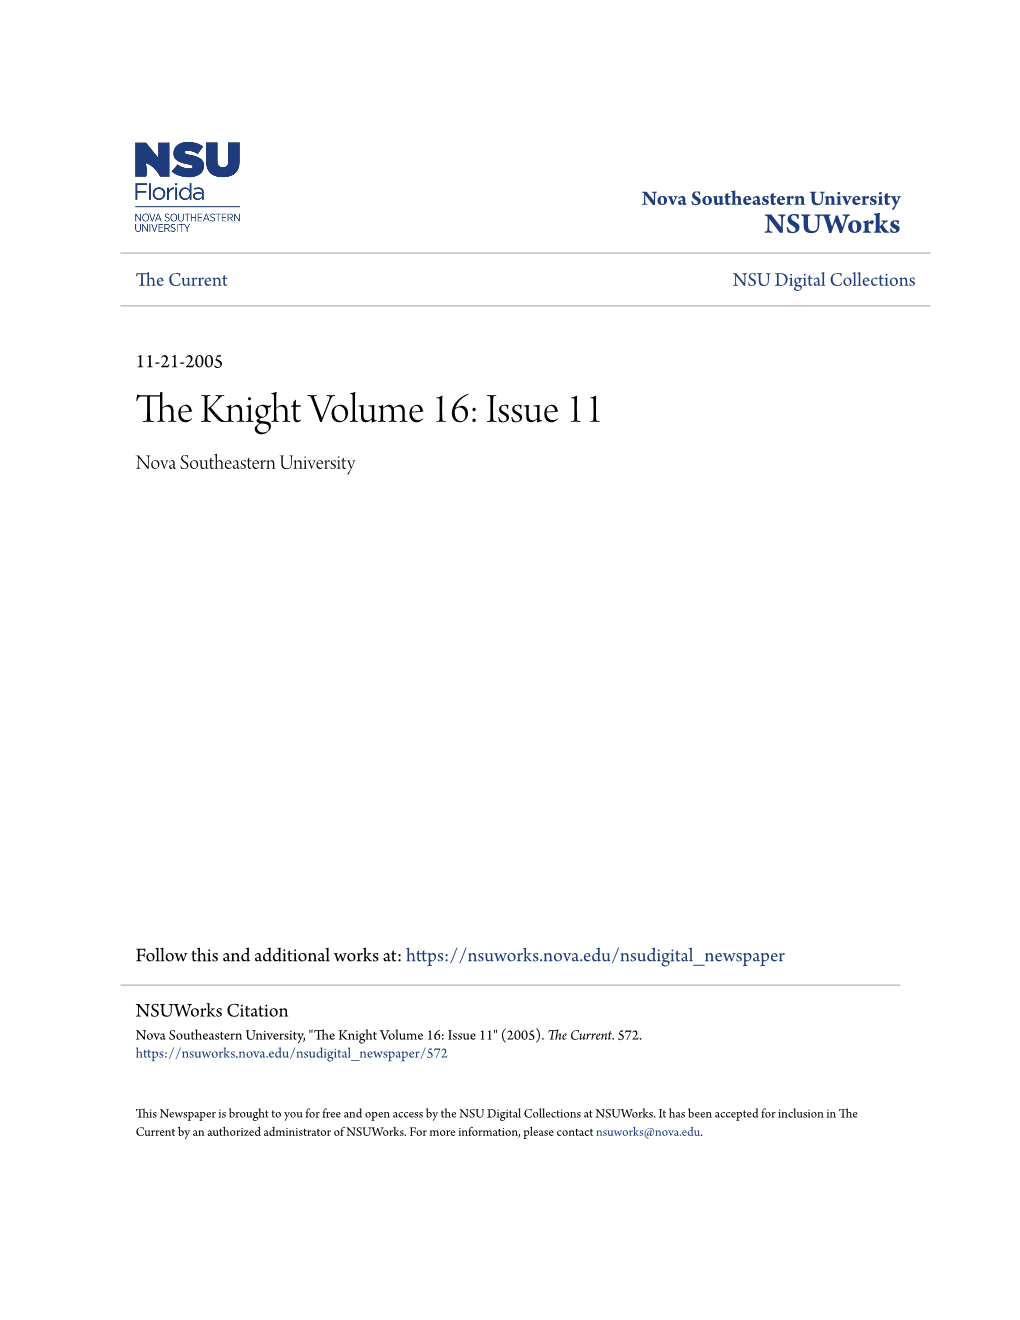 The Knight Volume 16: Issue 11 Nova Southeastern University